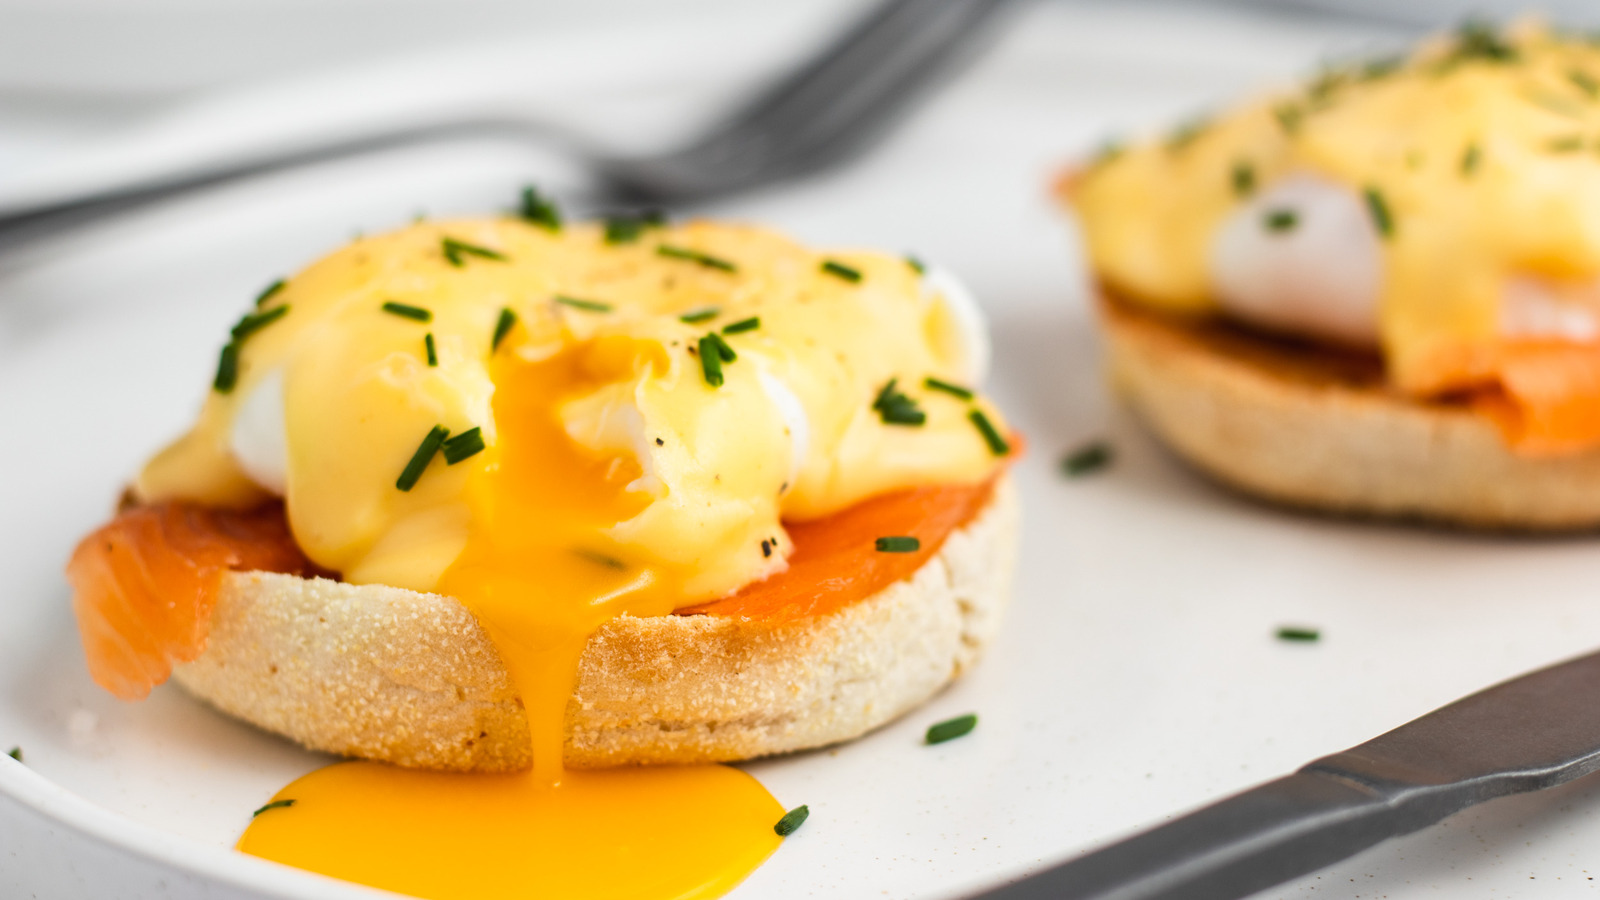 Eggs Benedict Breakfast Sandwich with Hollandaise Sauce